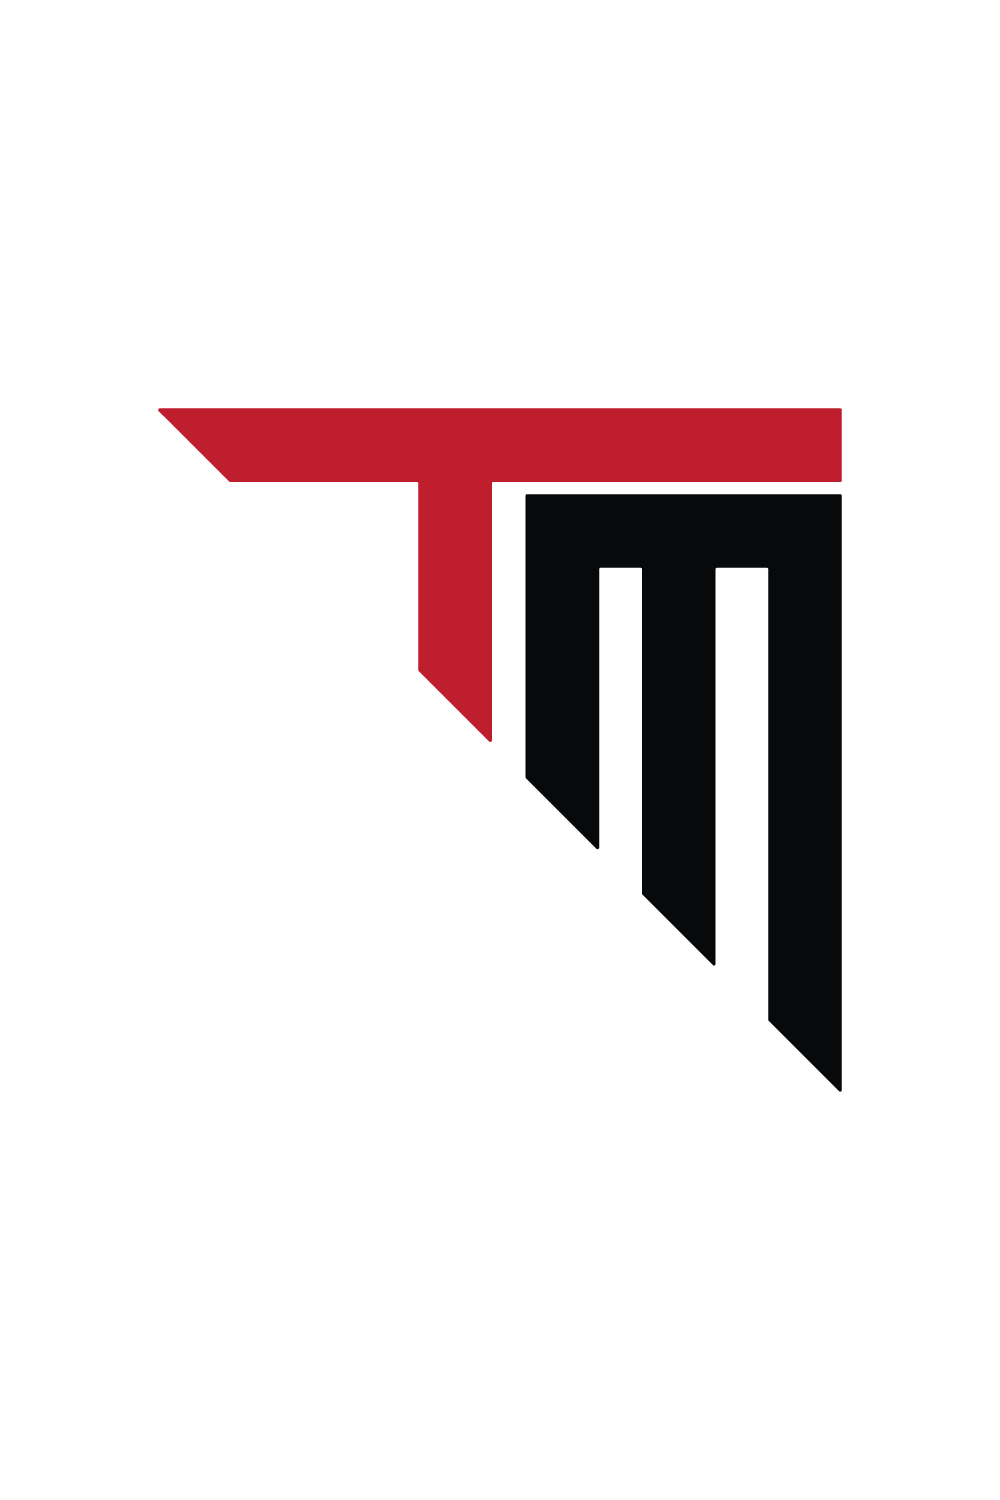 Initials TM logo design TM letters logo design vector template images design MT logo black and red color best company identity pinterest preview image.